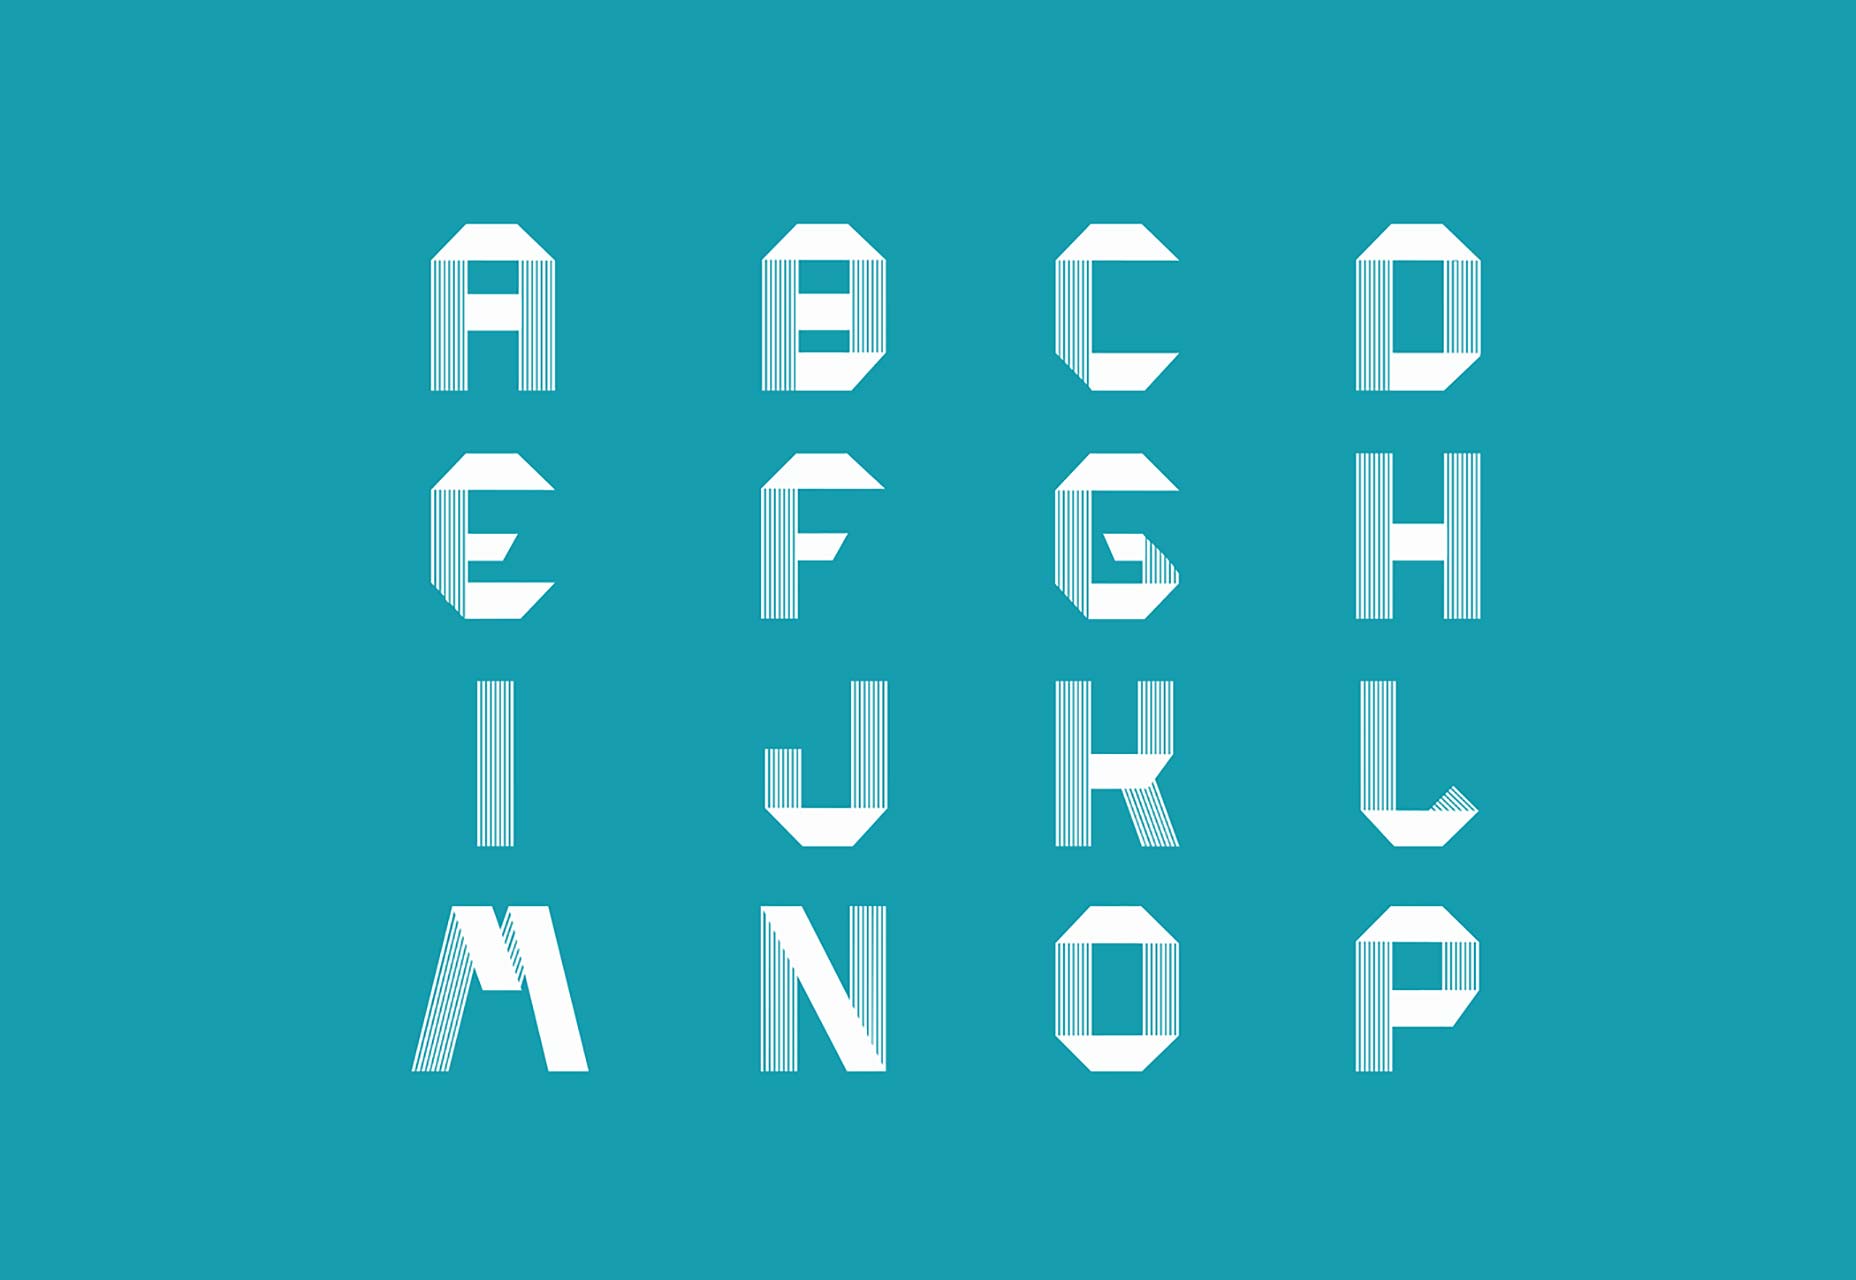 Ridge free fonts for designers